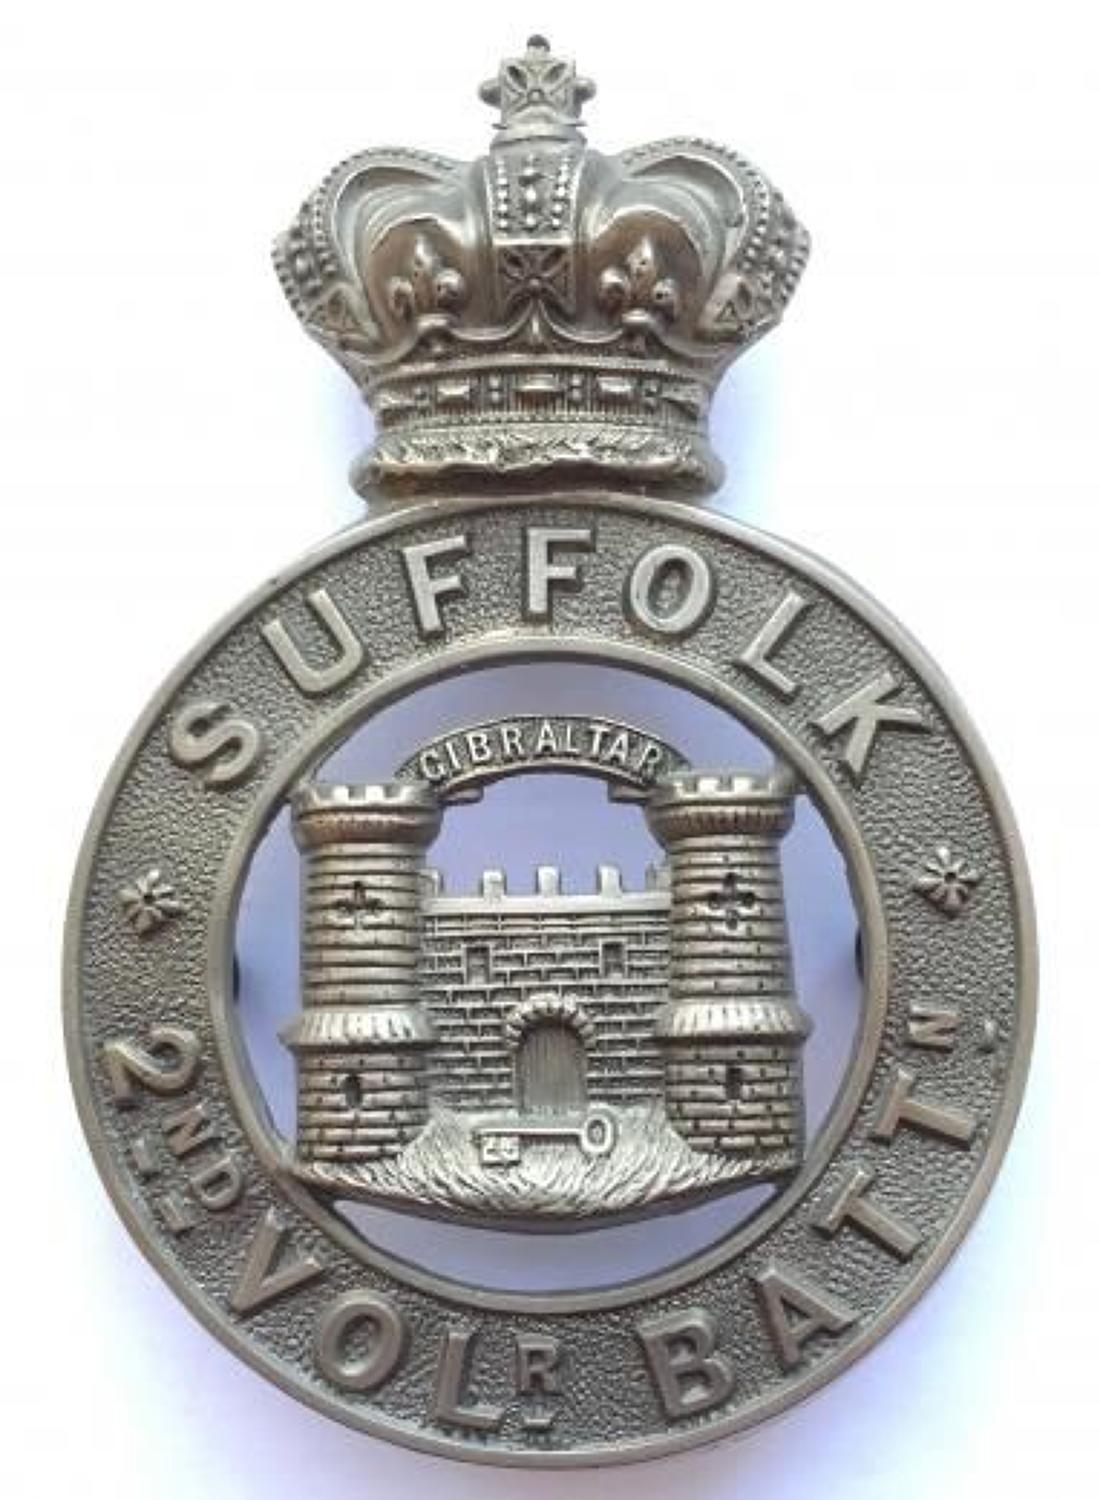 2nd VB Suffolk Regiment Victorian OR’s glengarry badge circa 1883-96